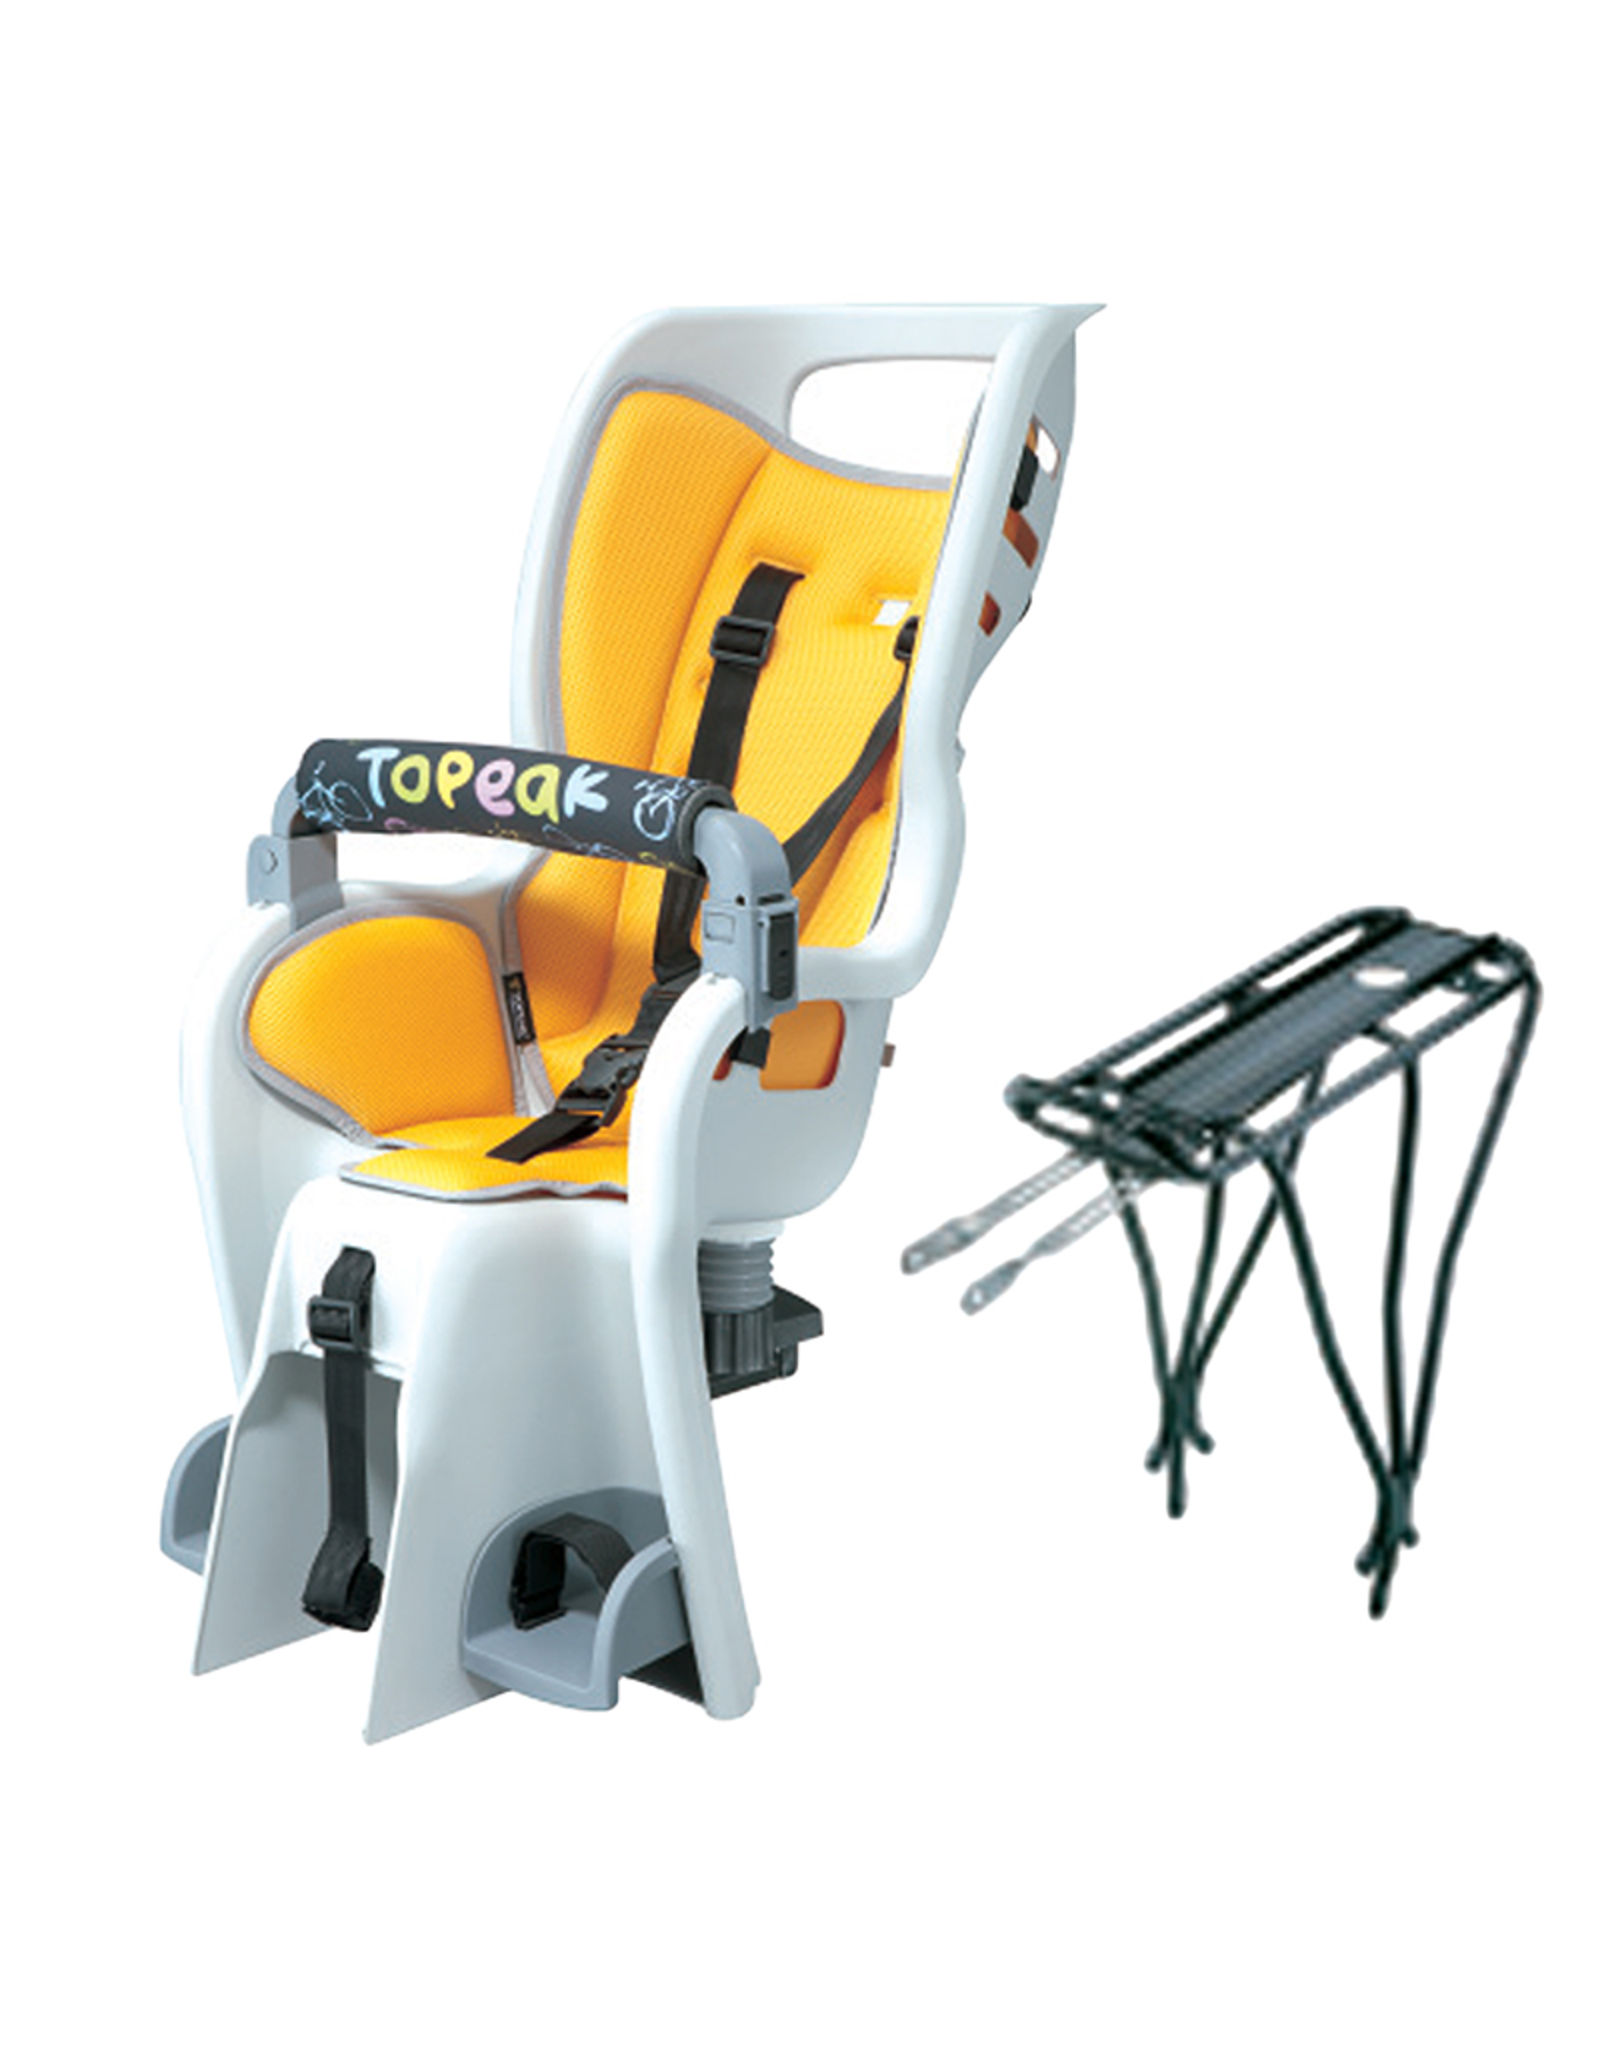 Topeak Topeak Rear Child Seat - BabySeat II w/ rack (Non-Disc), 48lb limit